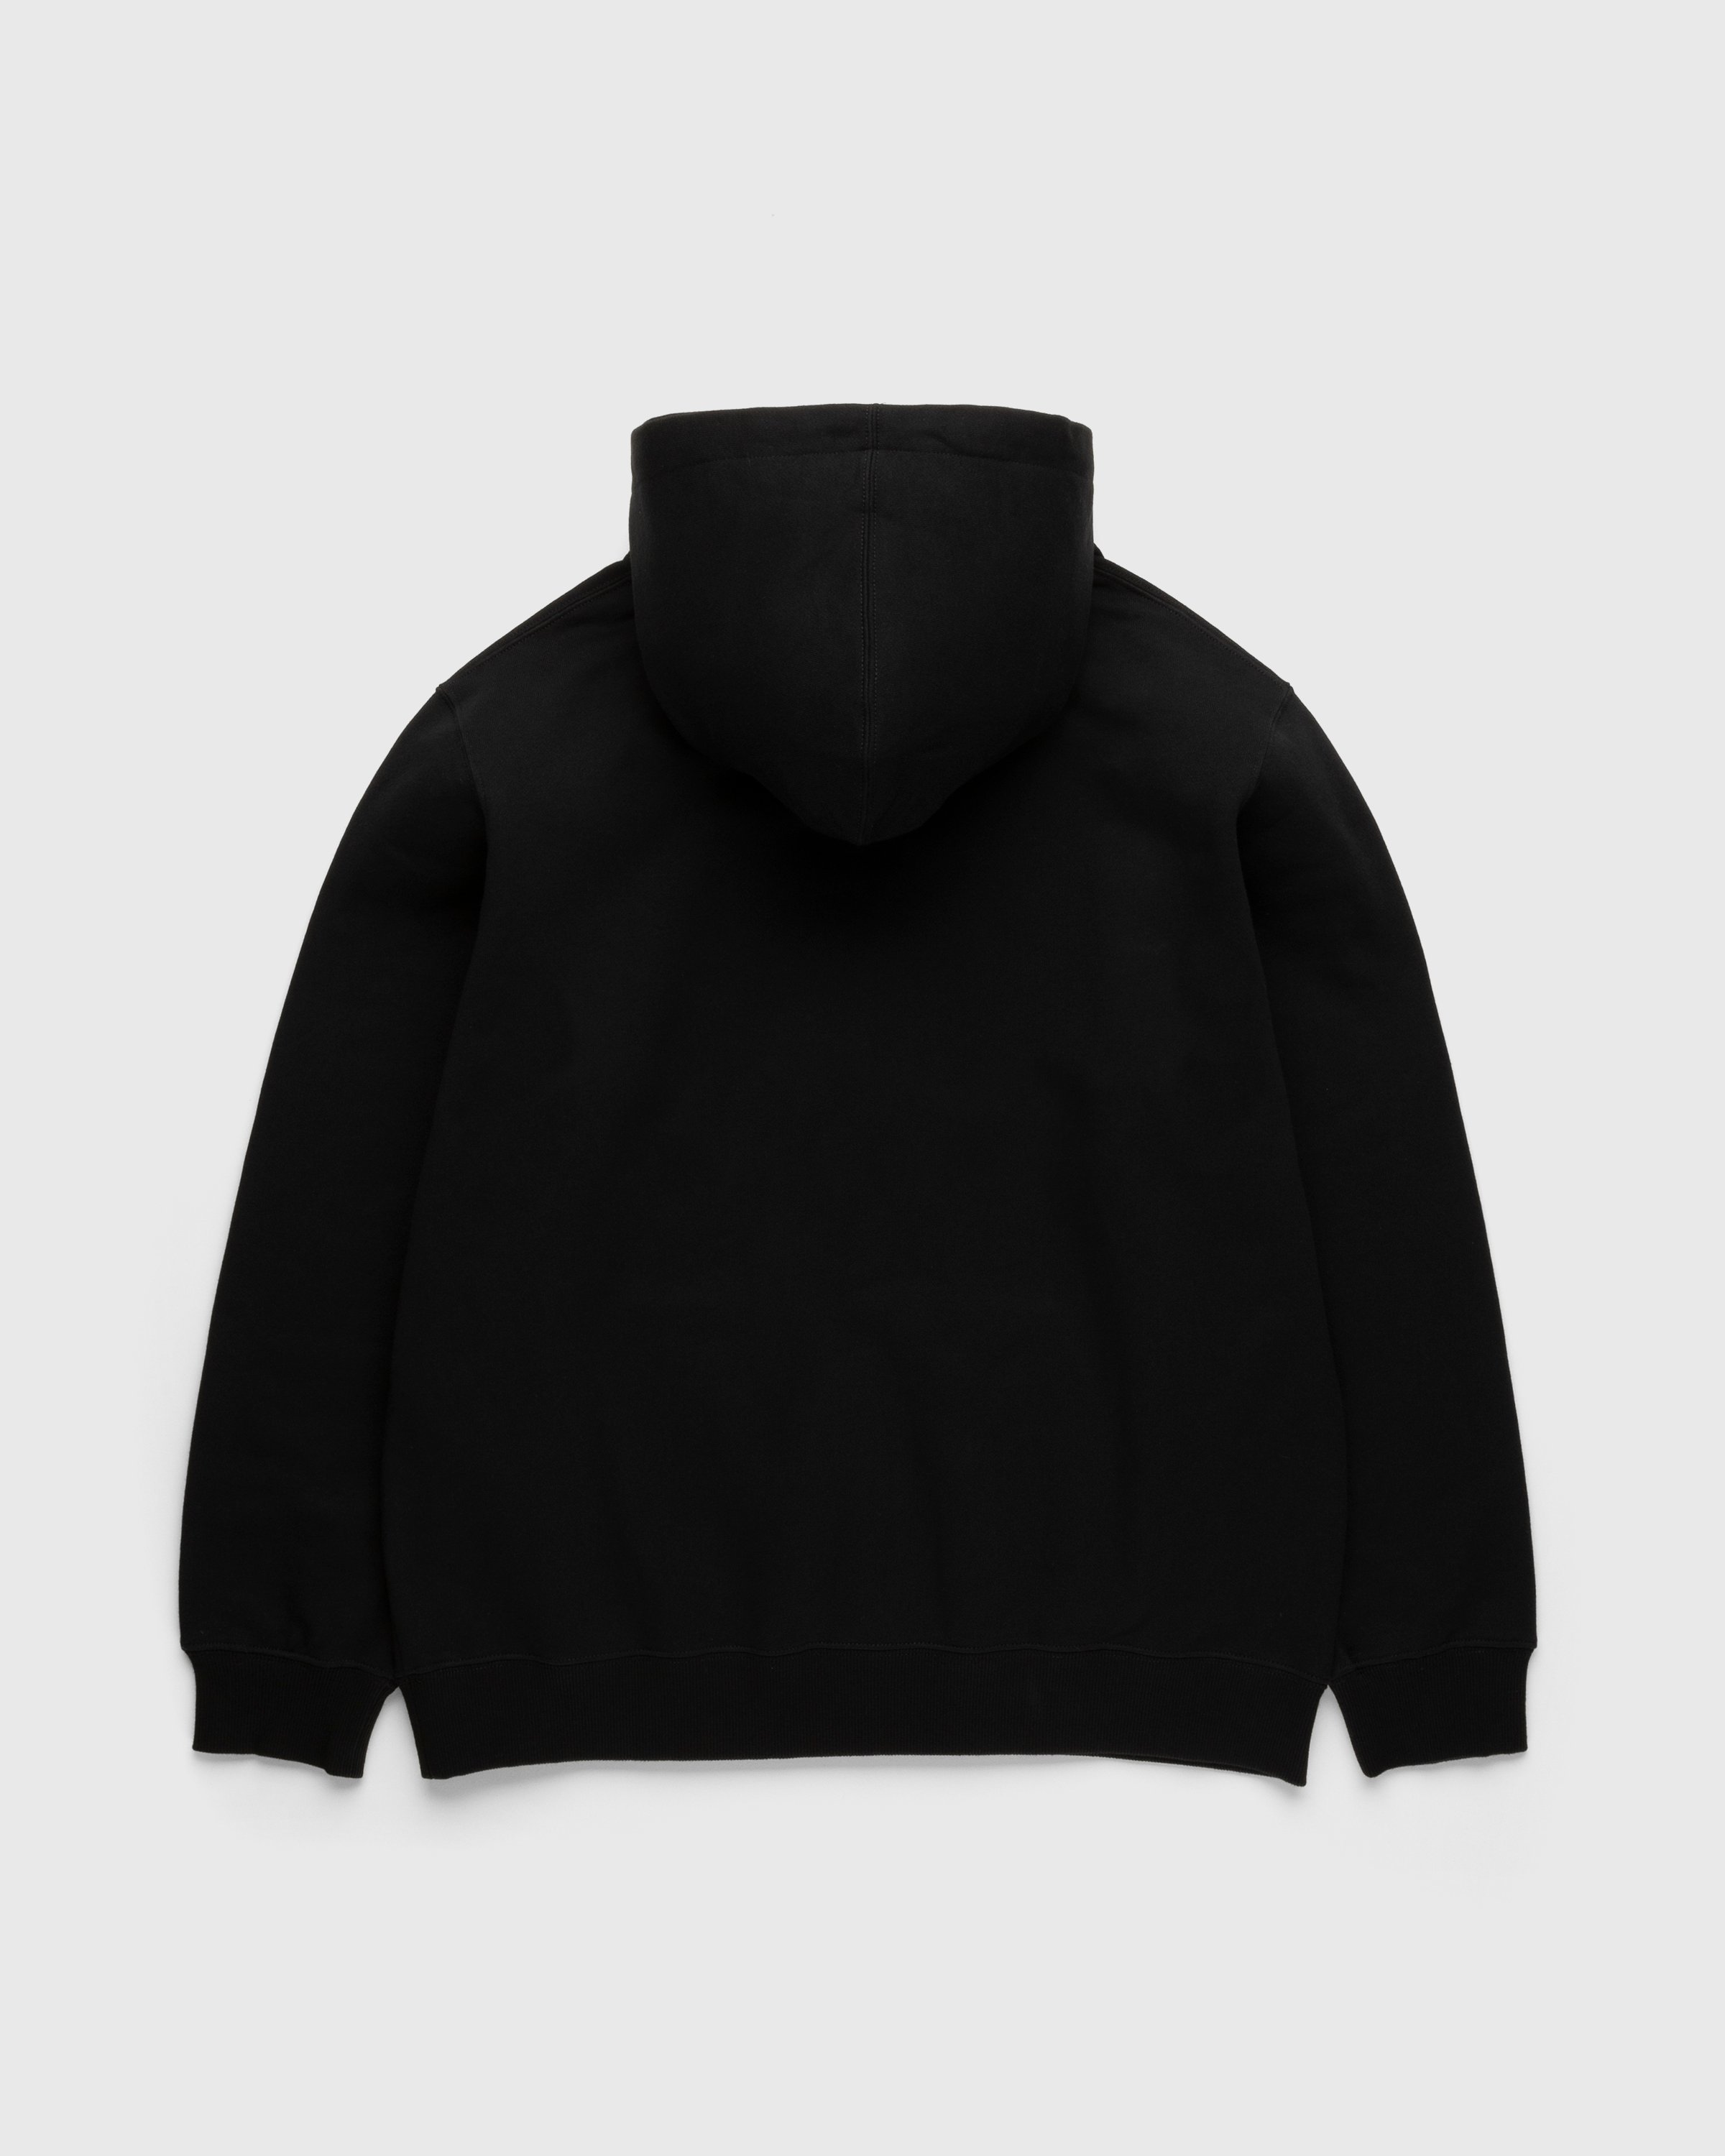 Gramicci - One Point Hooded Sweatshirt Black - Clothing - Black - Image 2